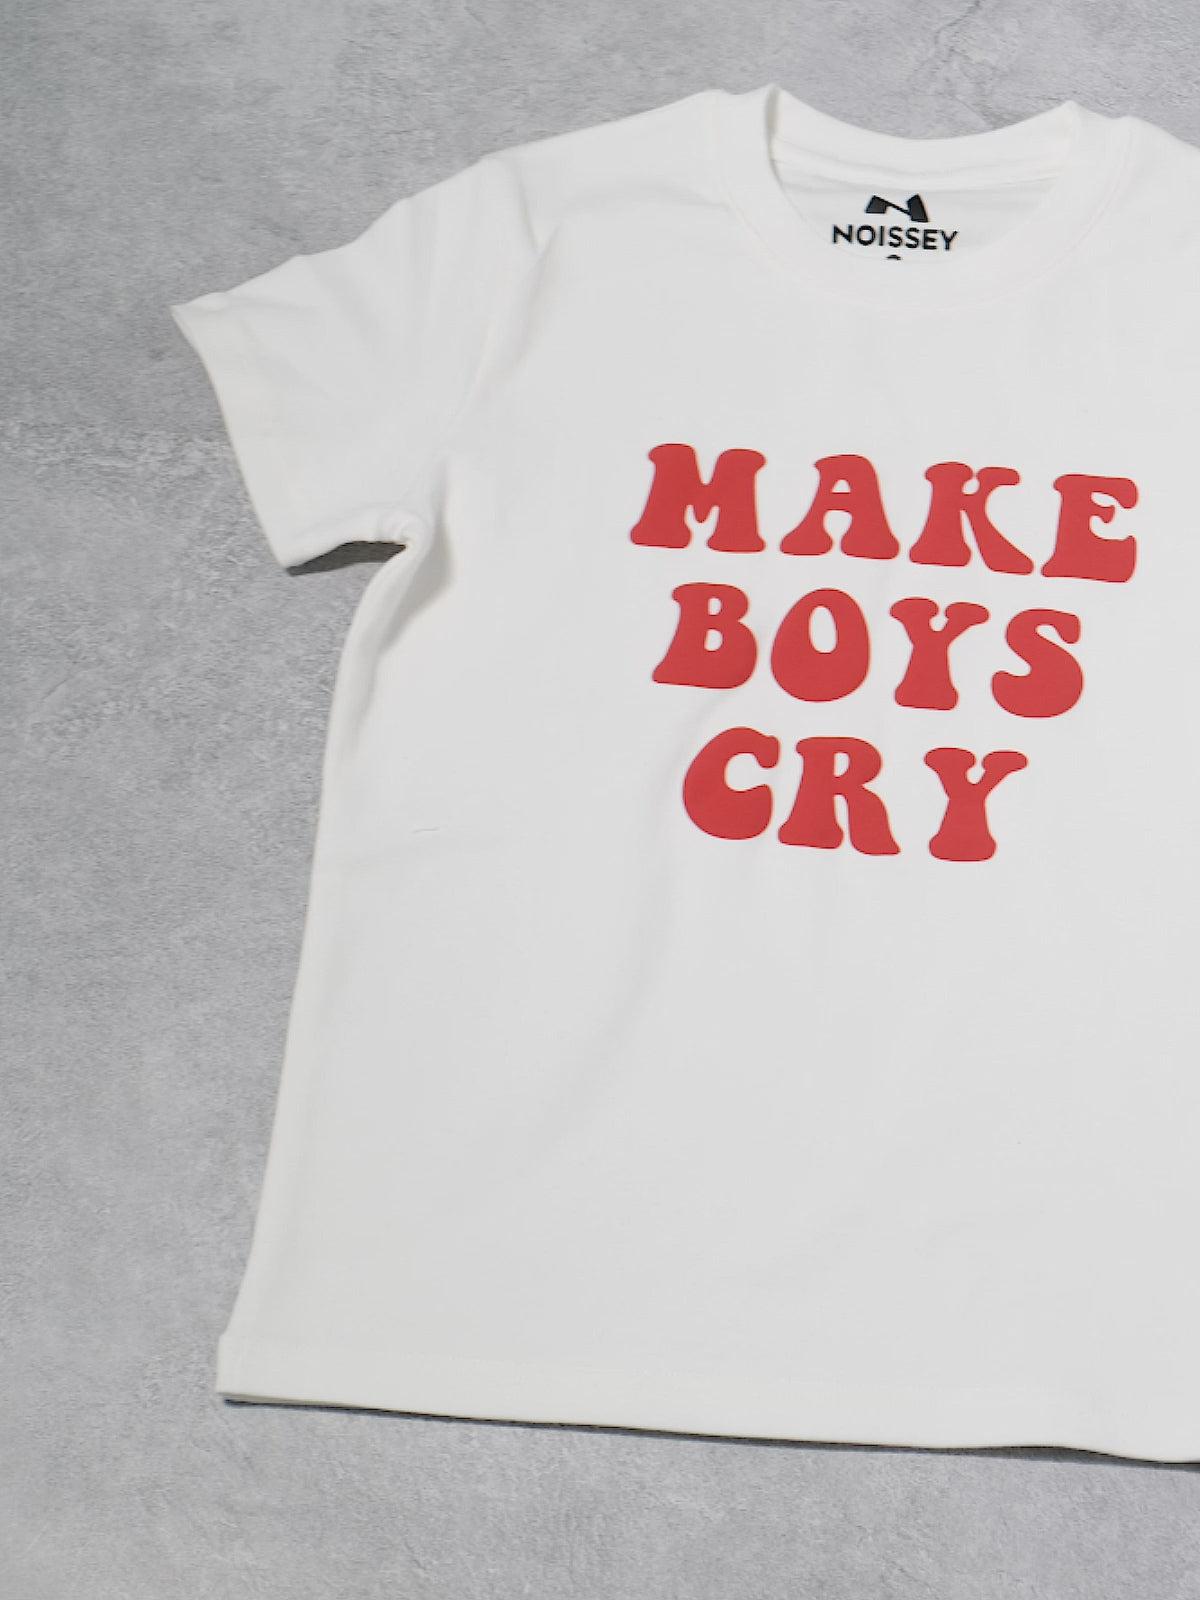 Make boys cry foamed print baby tee